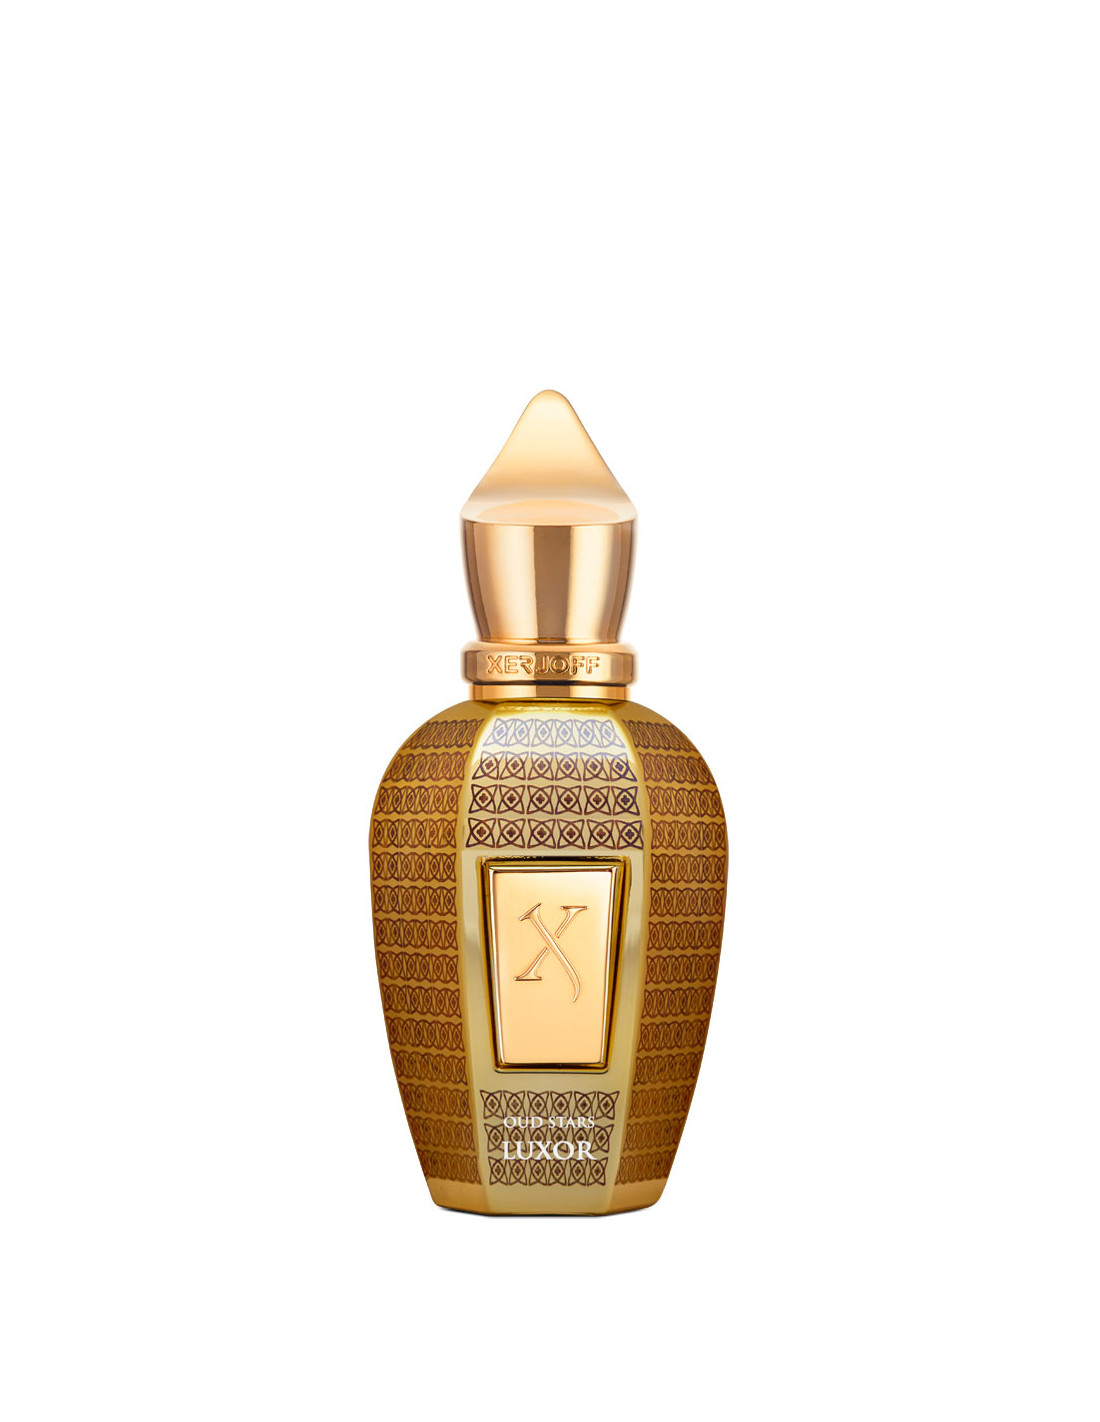 Xerjoff Oud Stars Luxor parfum unisex - Scentists